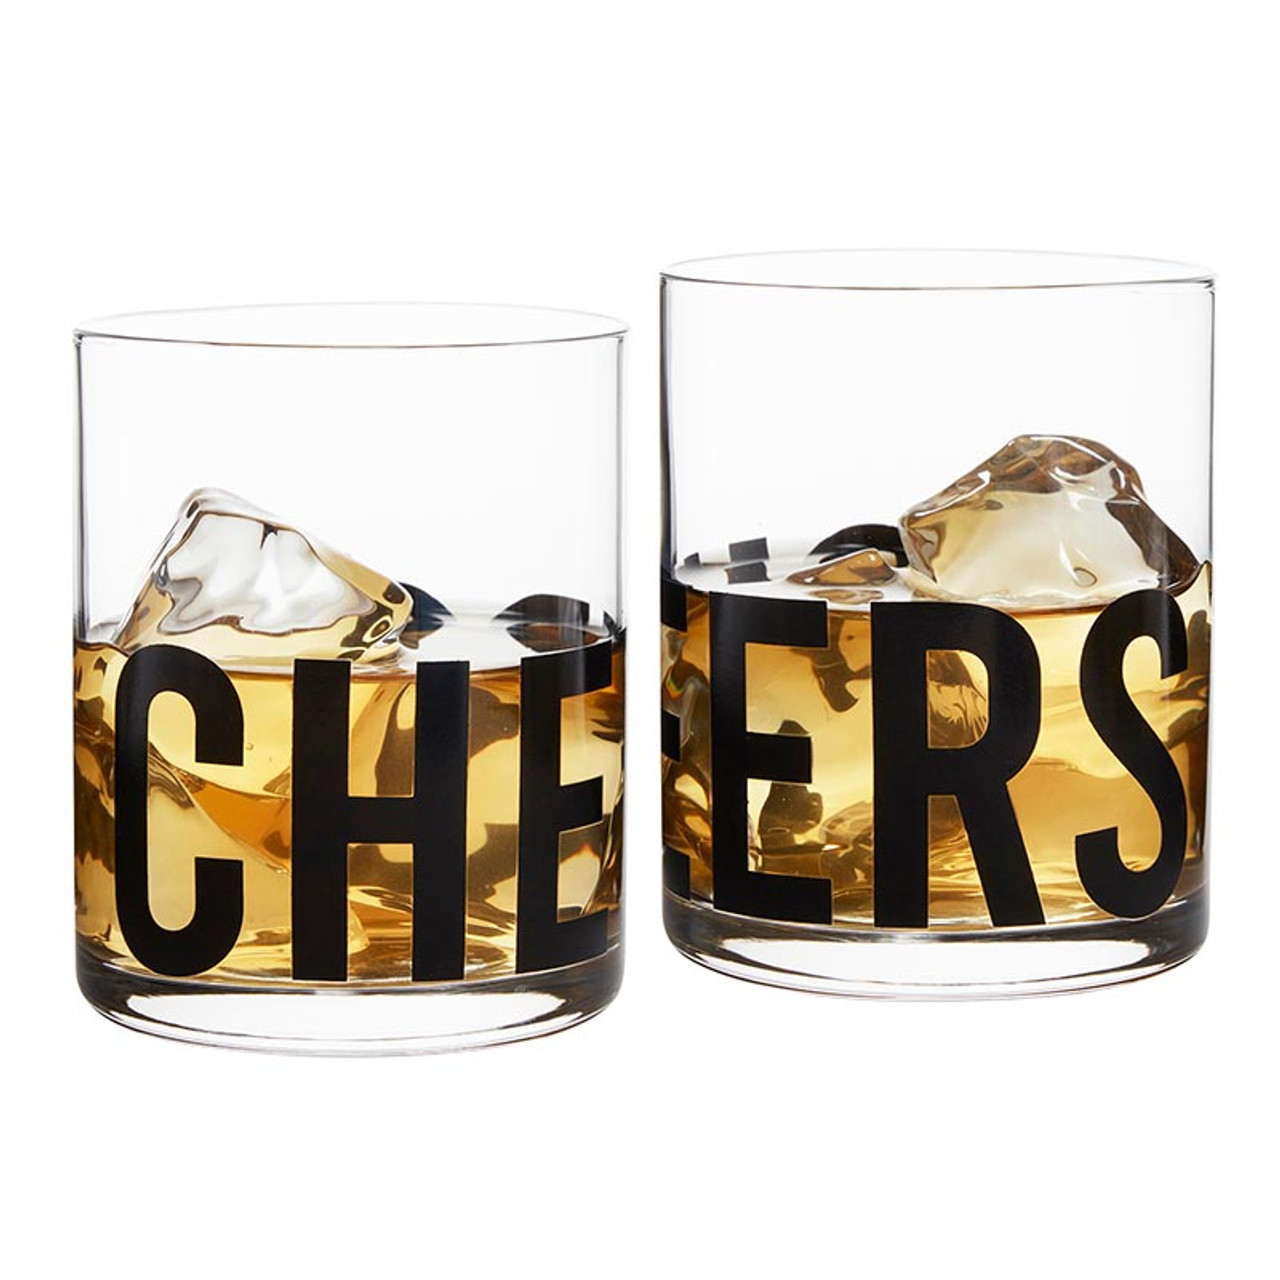 Stackable Acrylic Wine Glasses - Cheers - Santa Barbara Design Studio